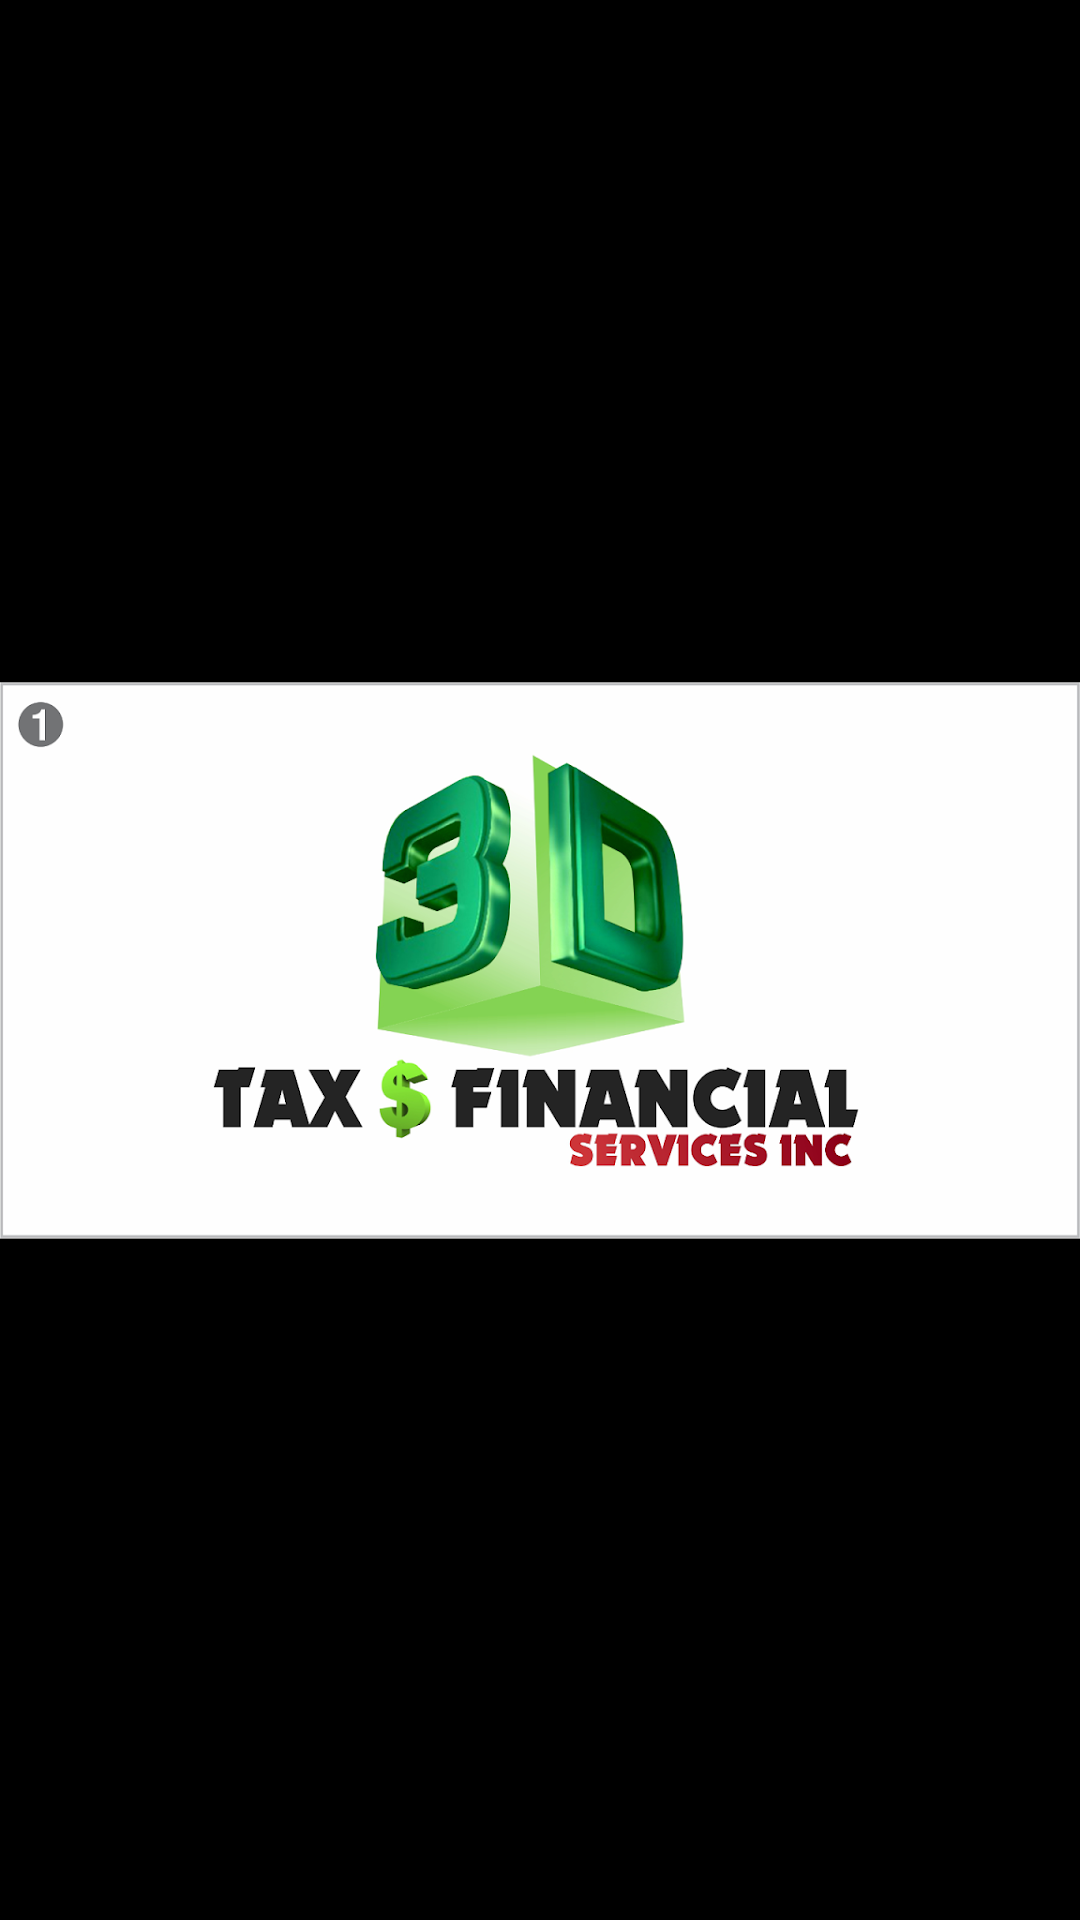 3D Tax & Financial Services Inc